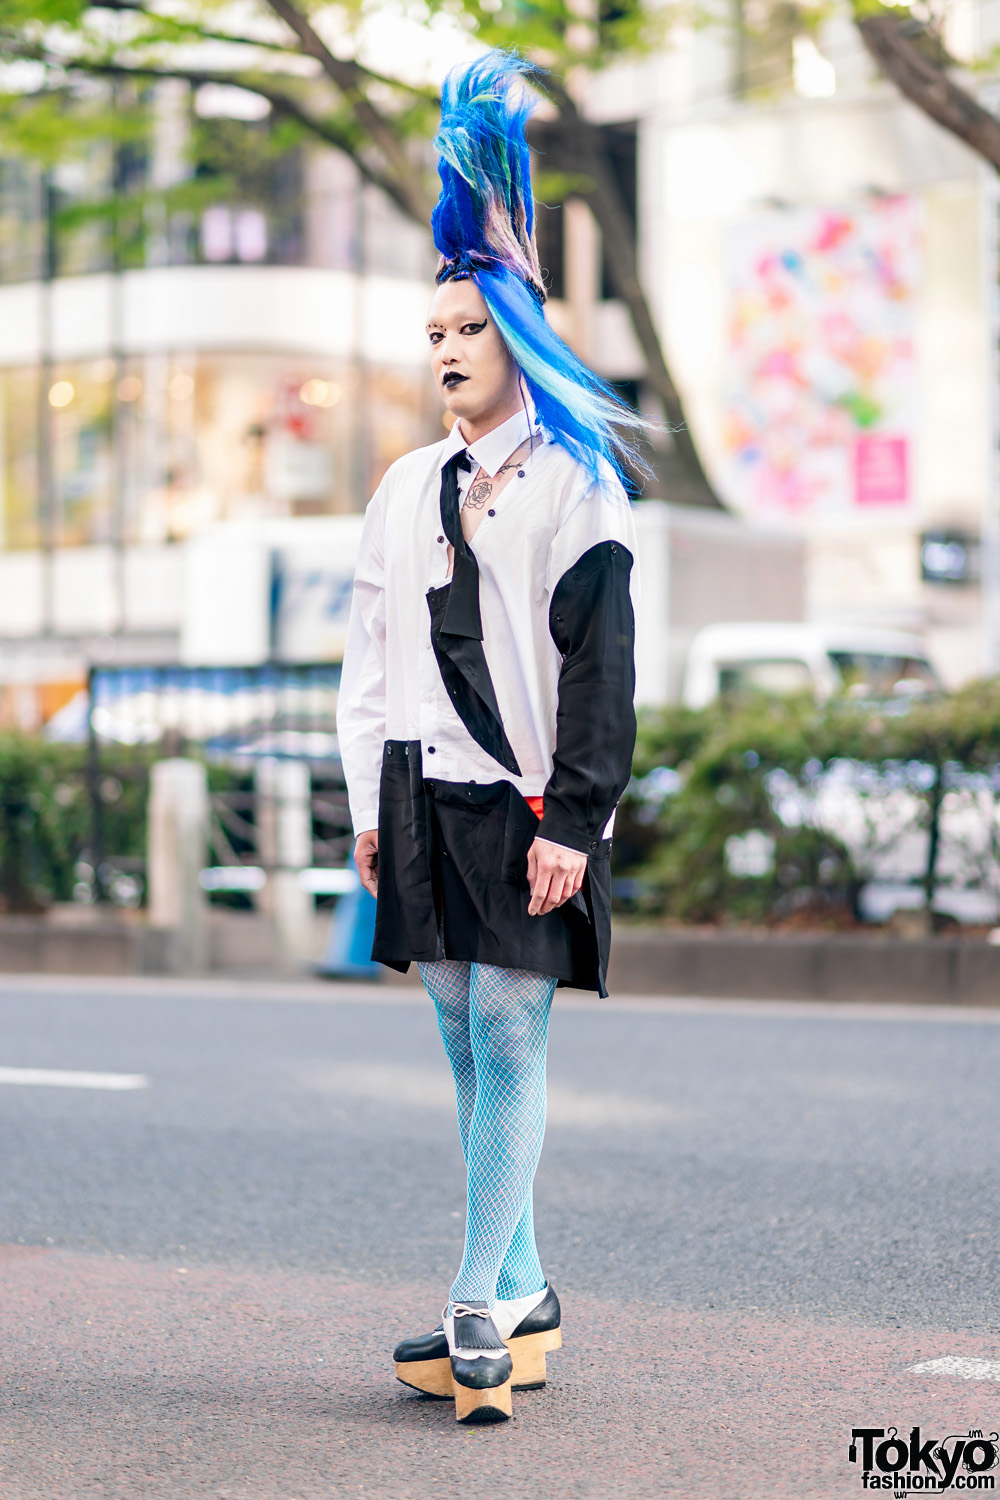 Vintage Fashion Buyer & Model in Harajuku w/ Tall Blue Hairstyle, Tattoos, Yohji Yamamoto Long Shirt, Alexander Wang, Y's & Vivienne Westwood Rocking Horse Golf Shoes